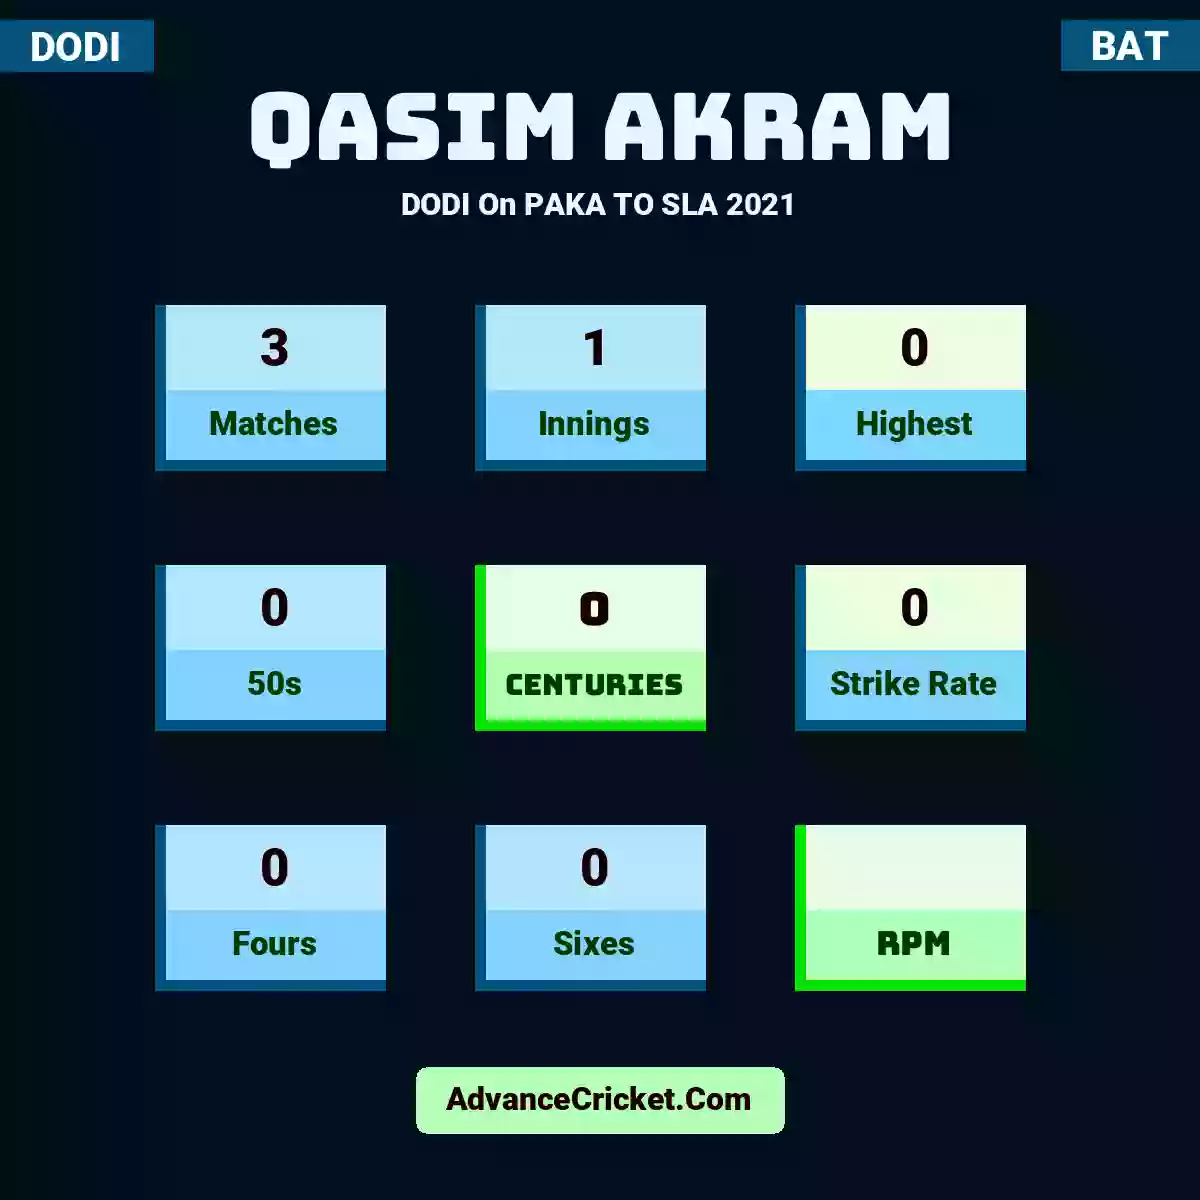 Qasim Akram DODI  On PAKA TO SLA 2021, Qasim Akram played 3 matches, scored 0 runs as highest, 0 half-centuries, and 0 centuries, with a strike rate of 0. Q.Akram hit 0 fours and 0 sixes.